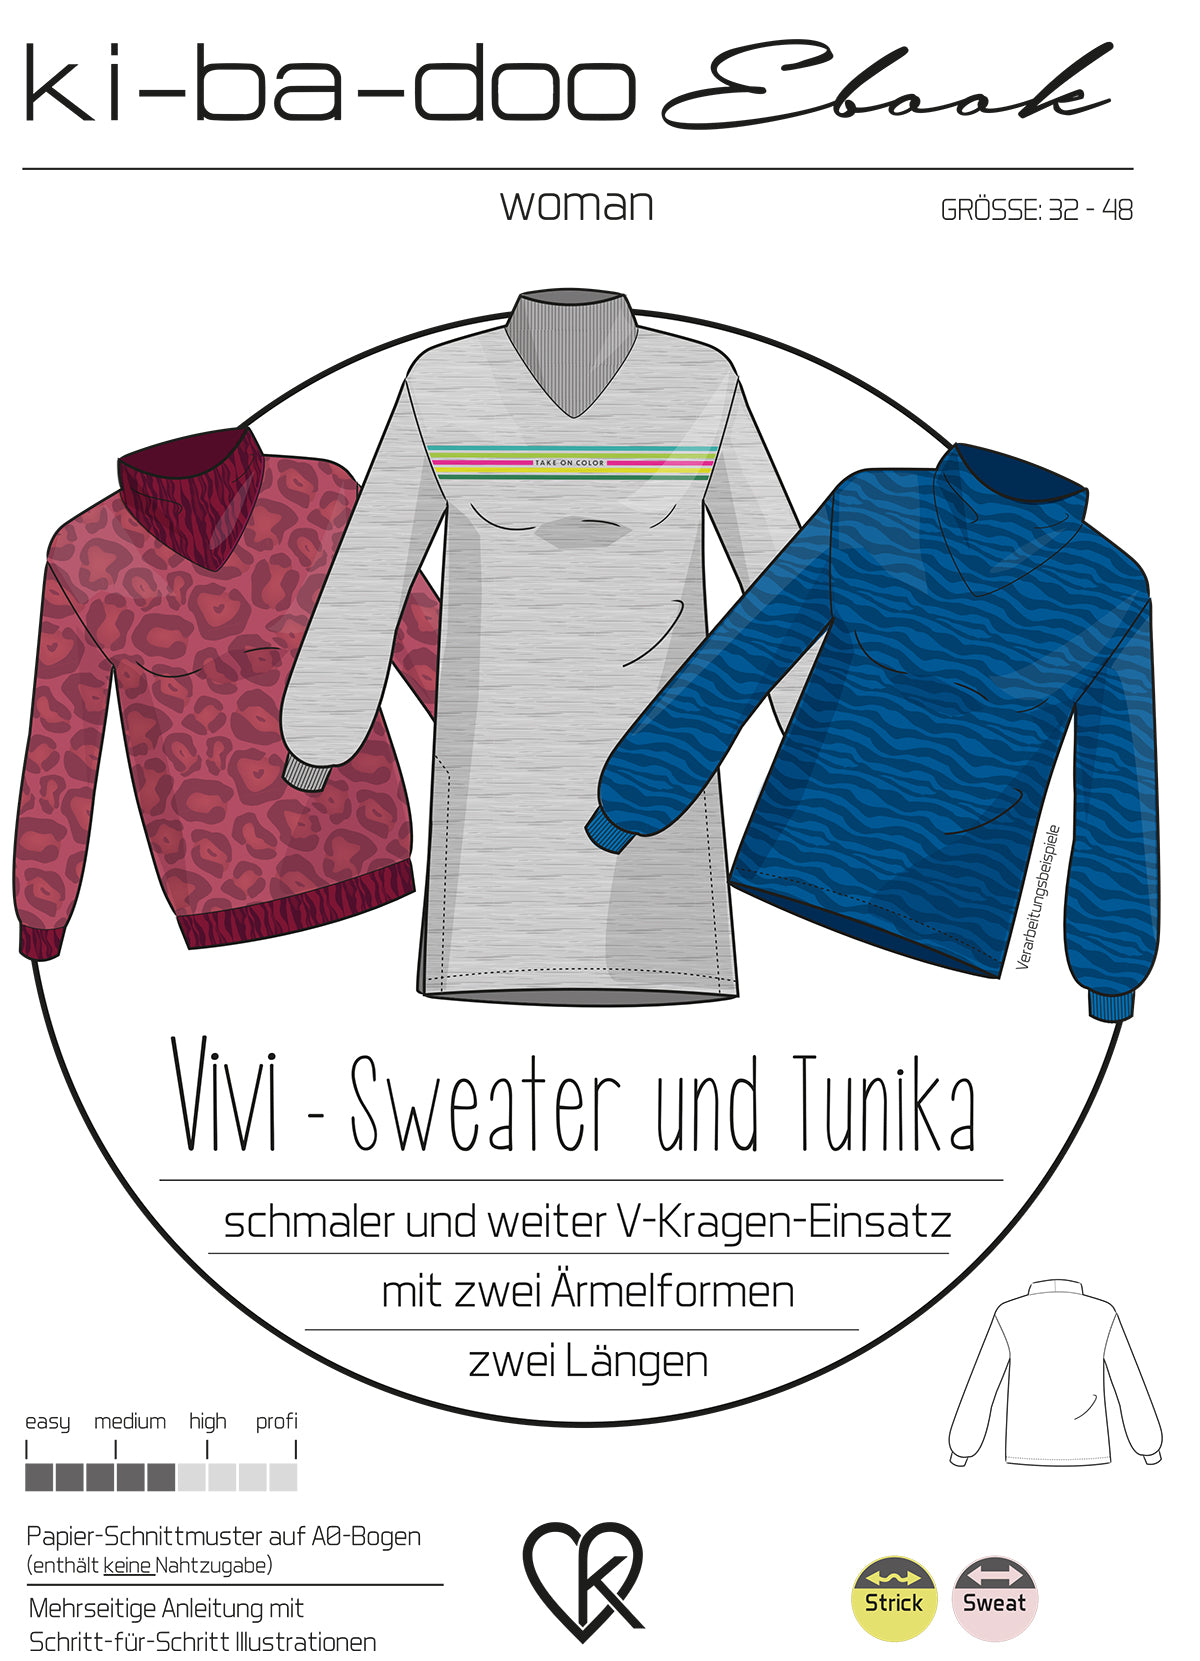 DIN Vivi zum 32-48 download – Sweater PDF ebook A4 Größe Ki-ba-doo |